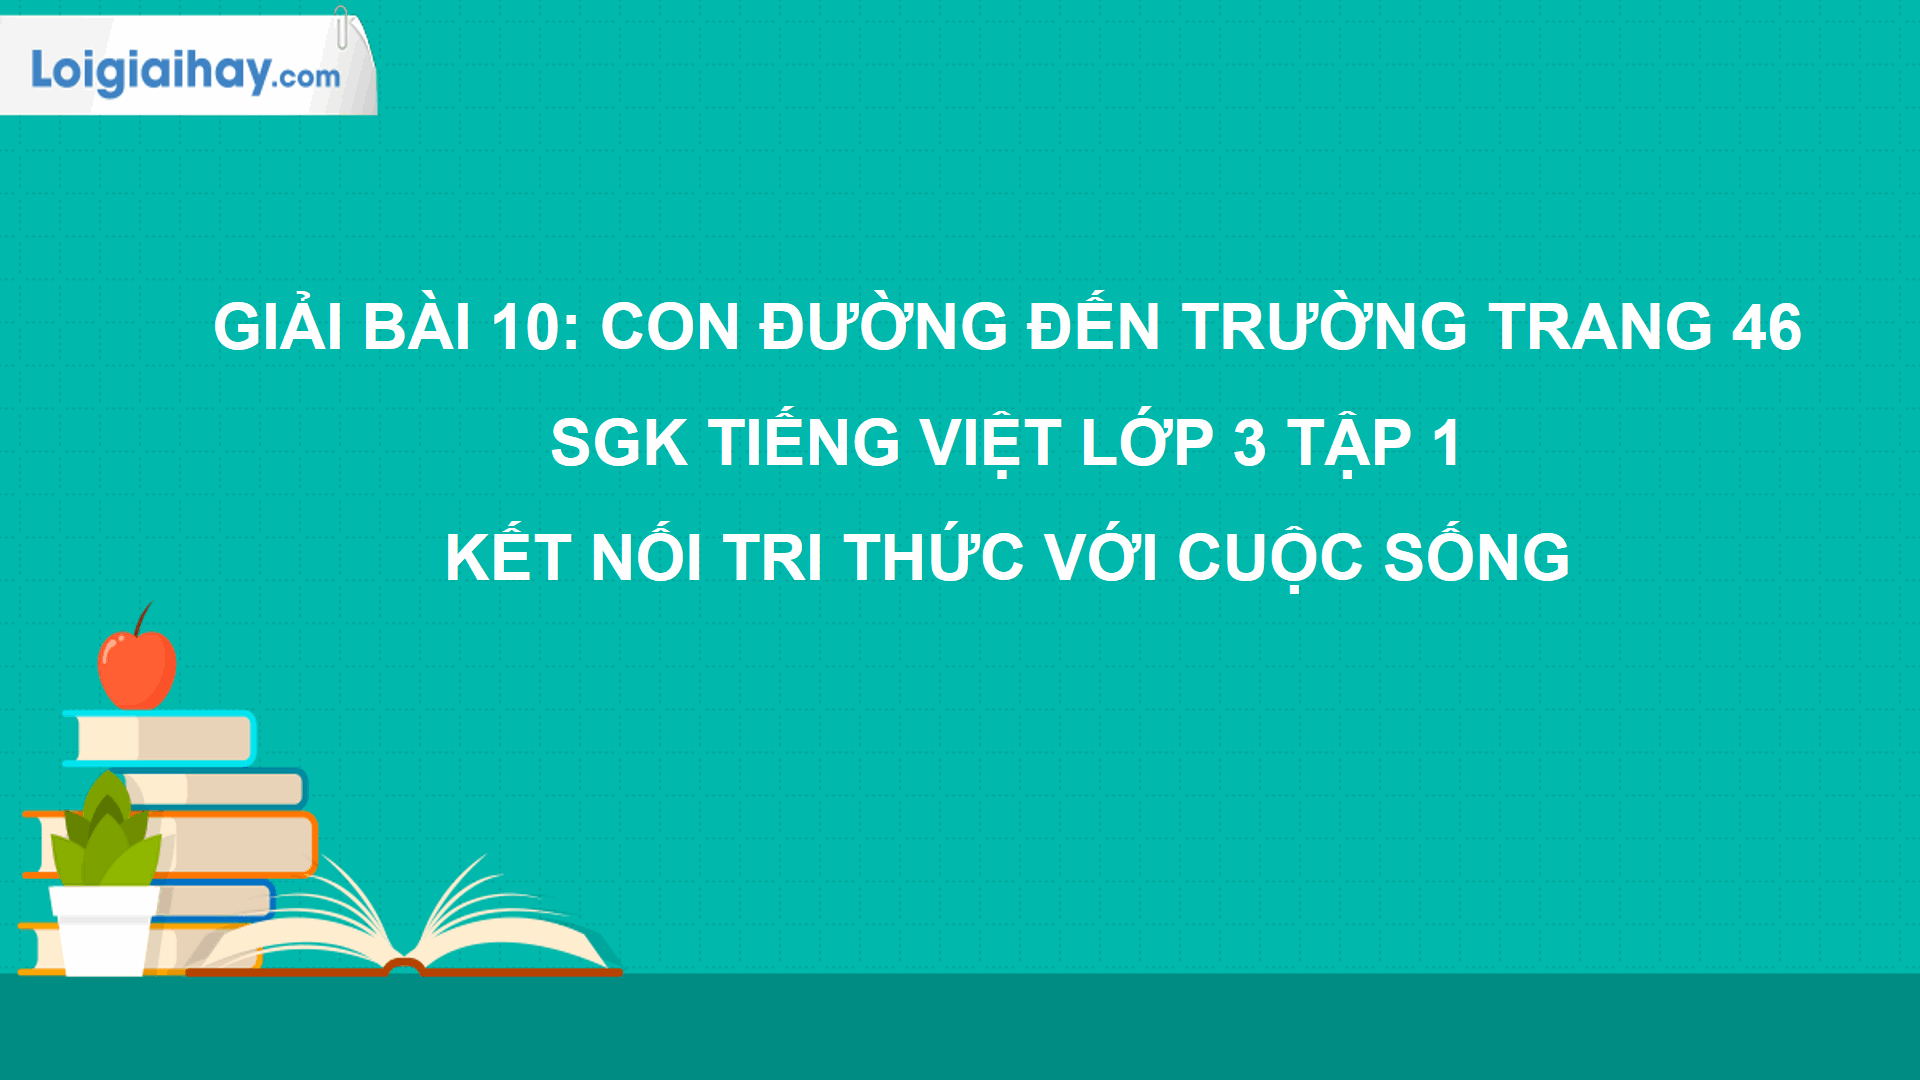 Tiếng Việt: \